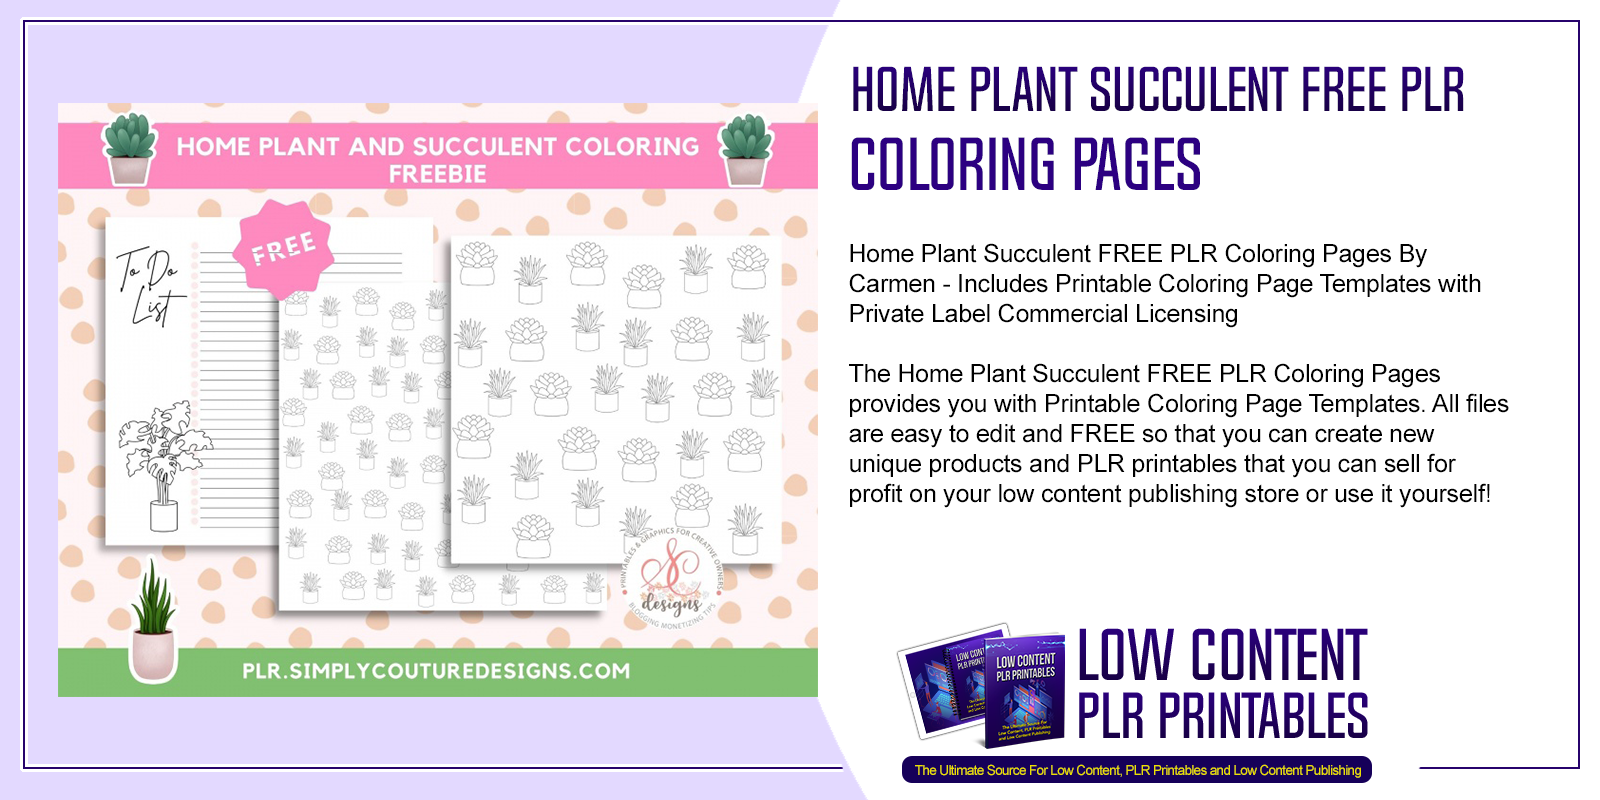 Home Plant Succulent FREE PLR Coloring Pages